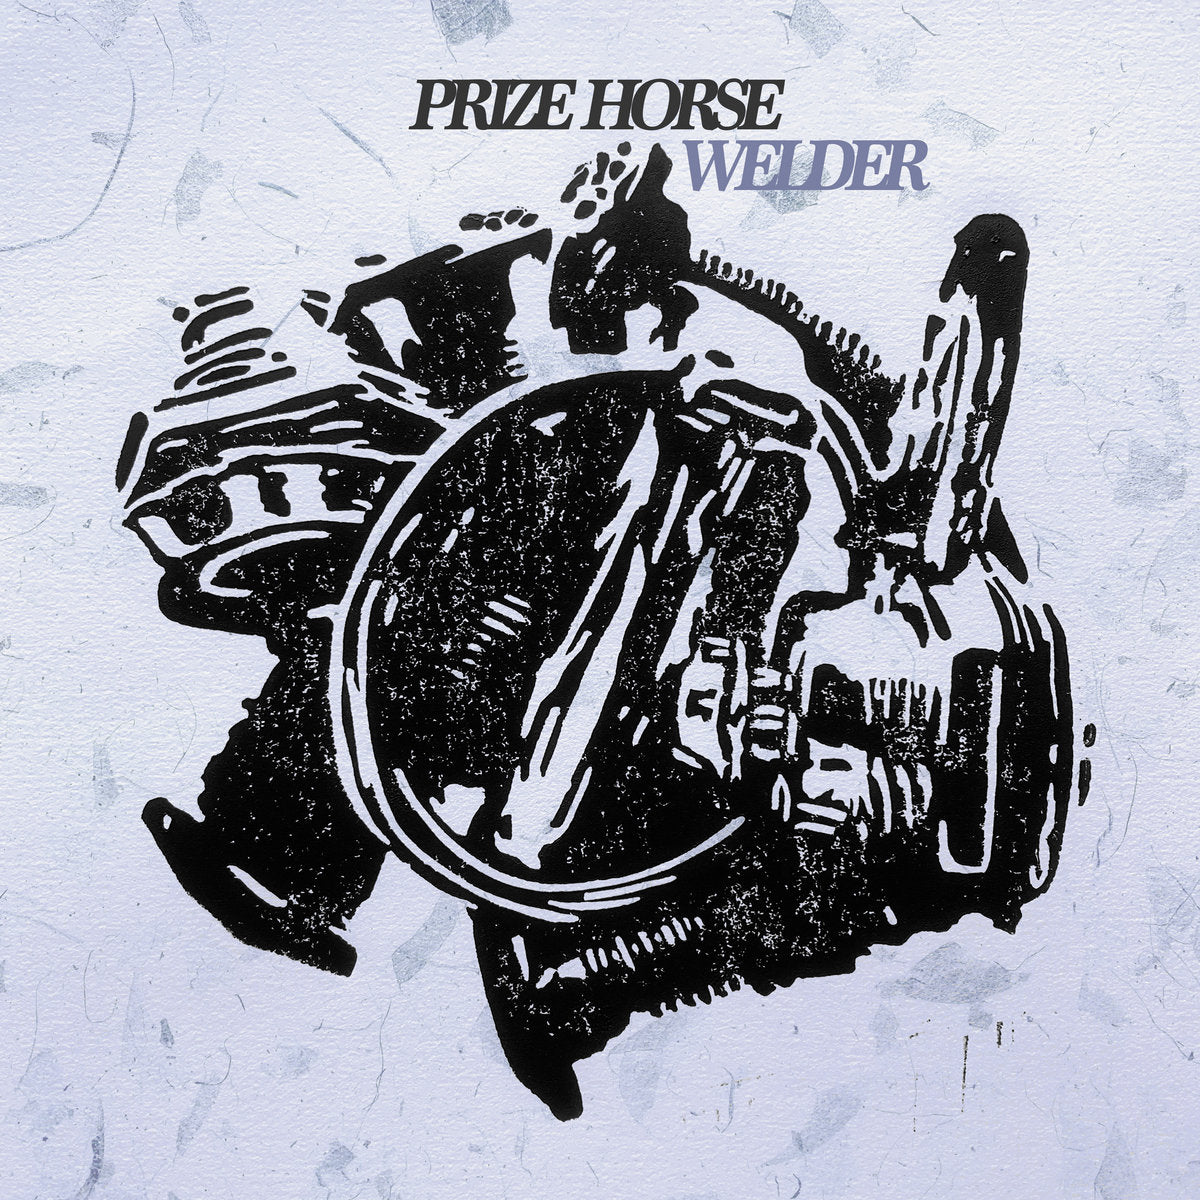 Prize Horse "Welder" EP